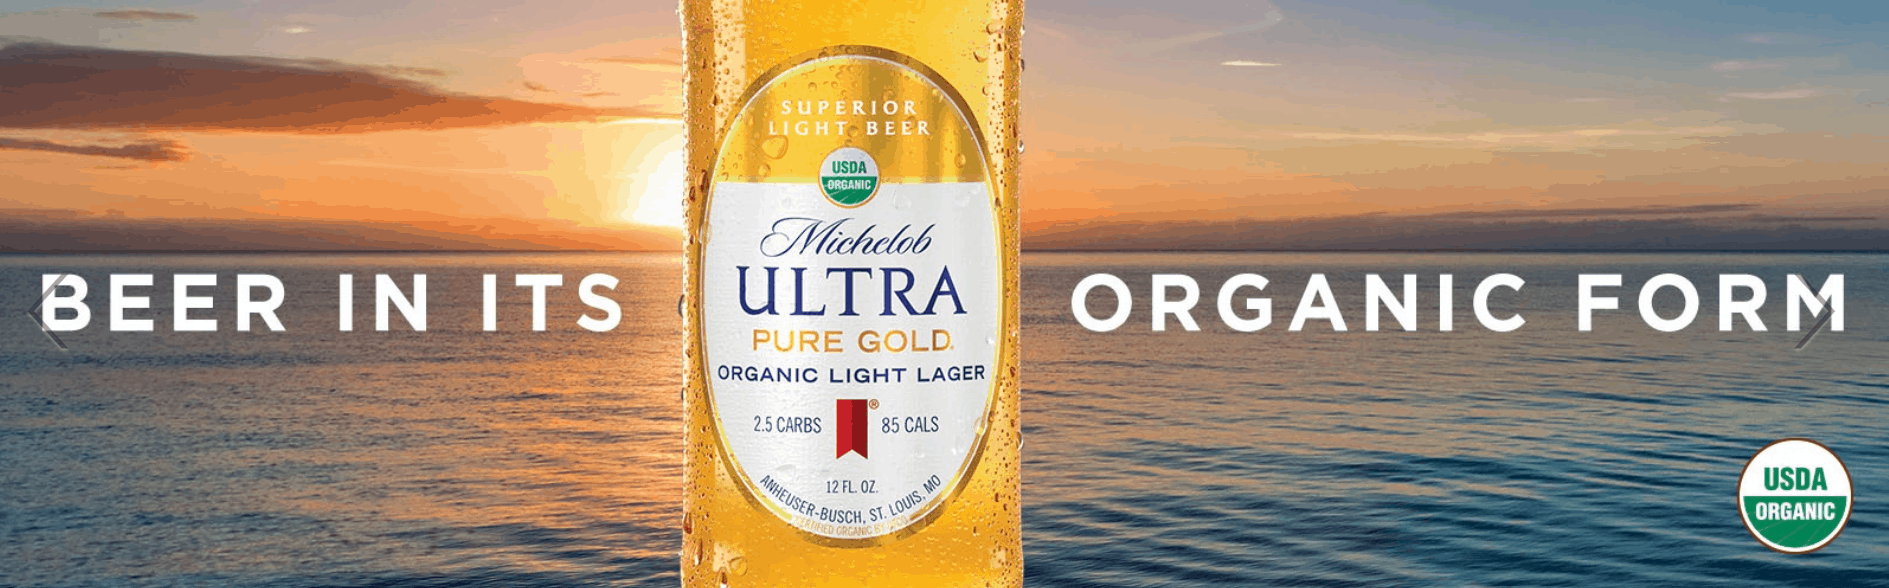 Michelob Ultra Pure Gold: Organic Beer Seeks Organic Future